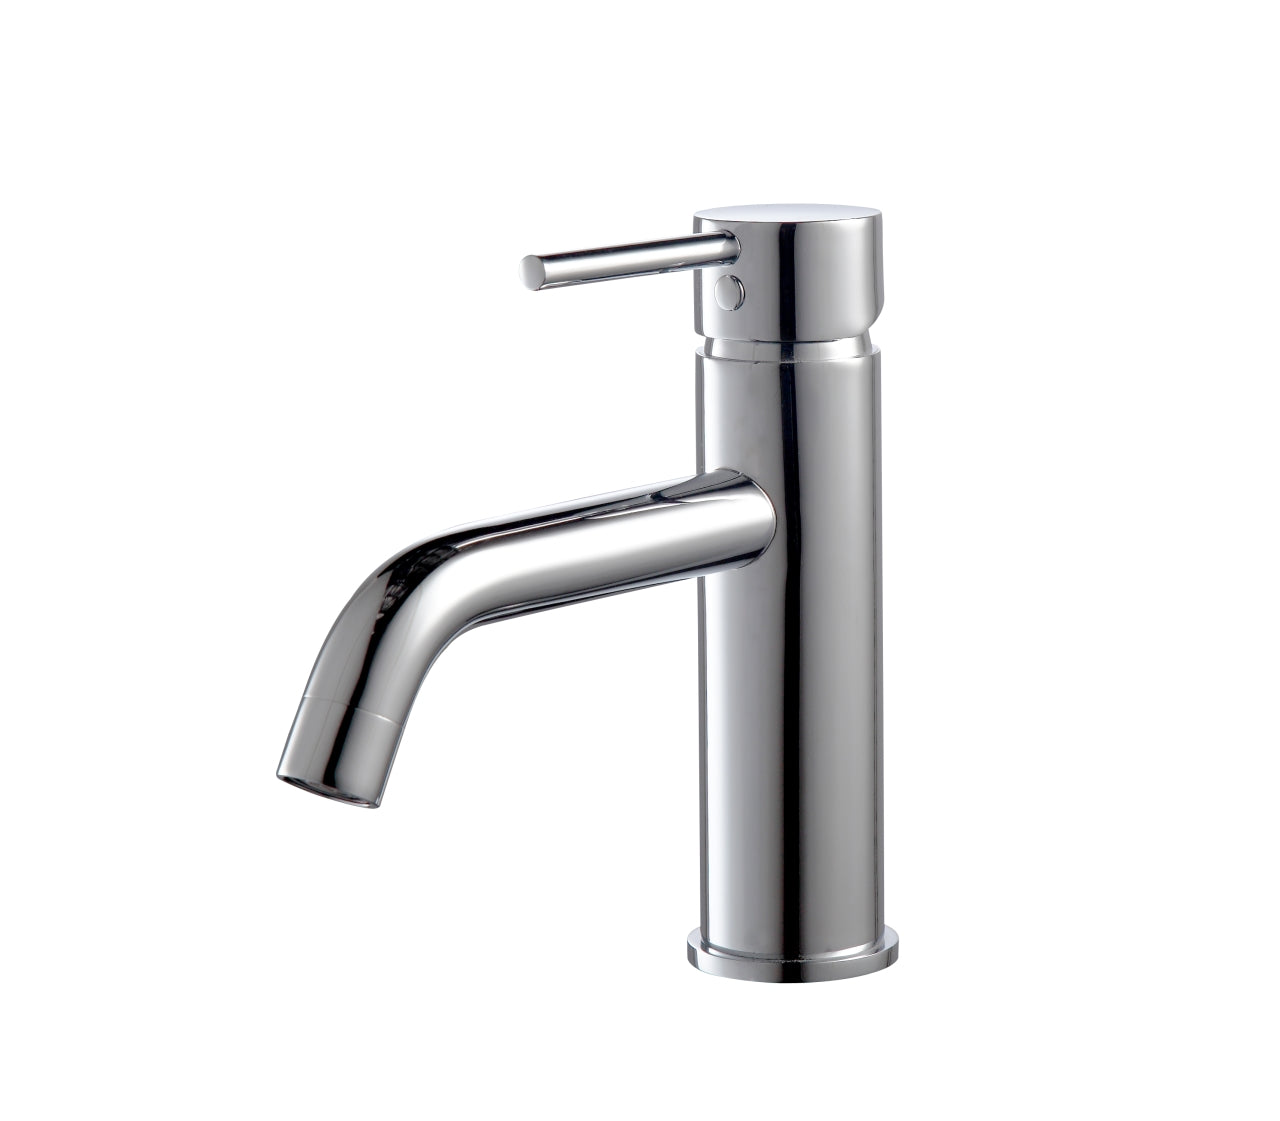 Kube Bath Aqua Rondo Single Hole Mount Bathroom Vanity Faucet – Chrome